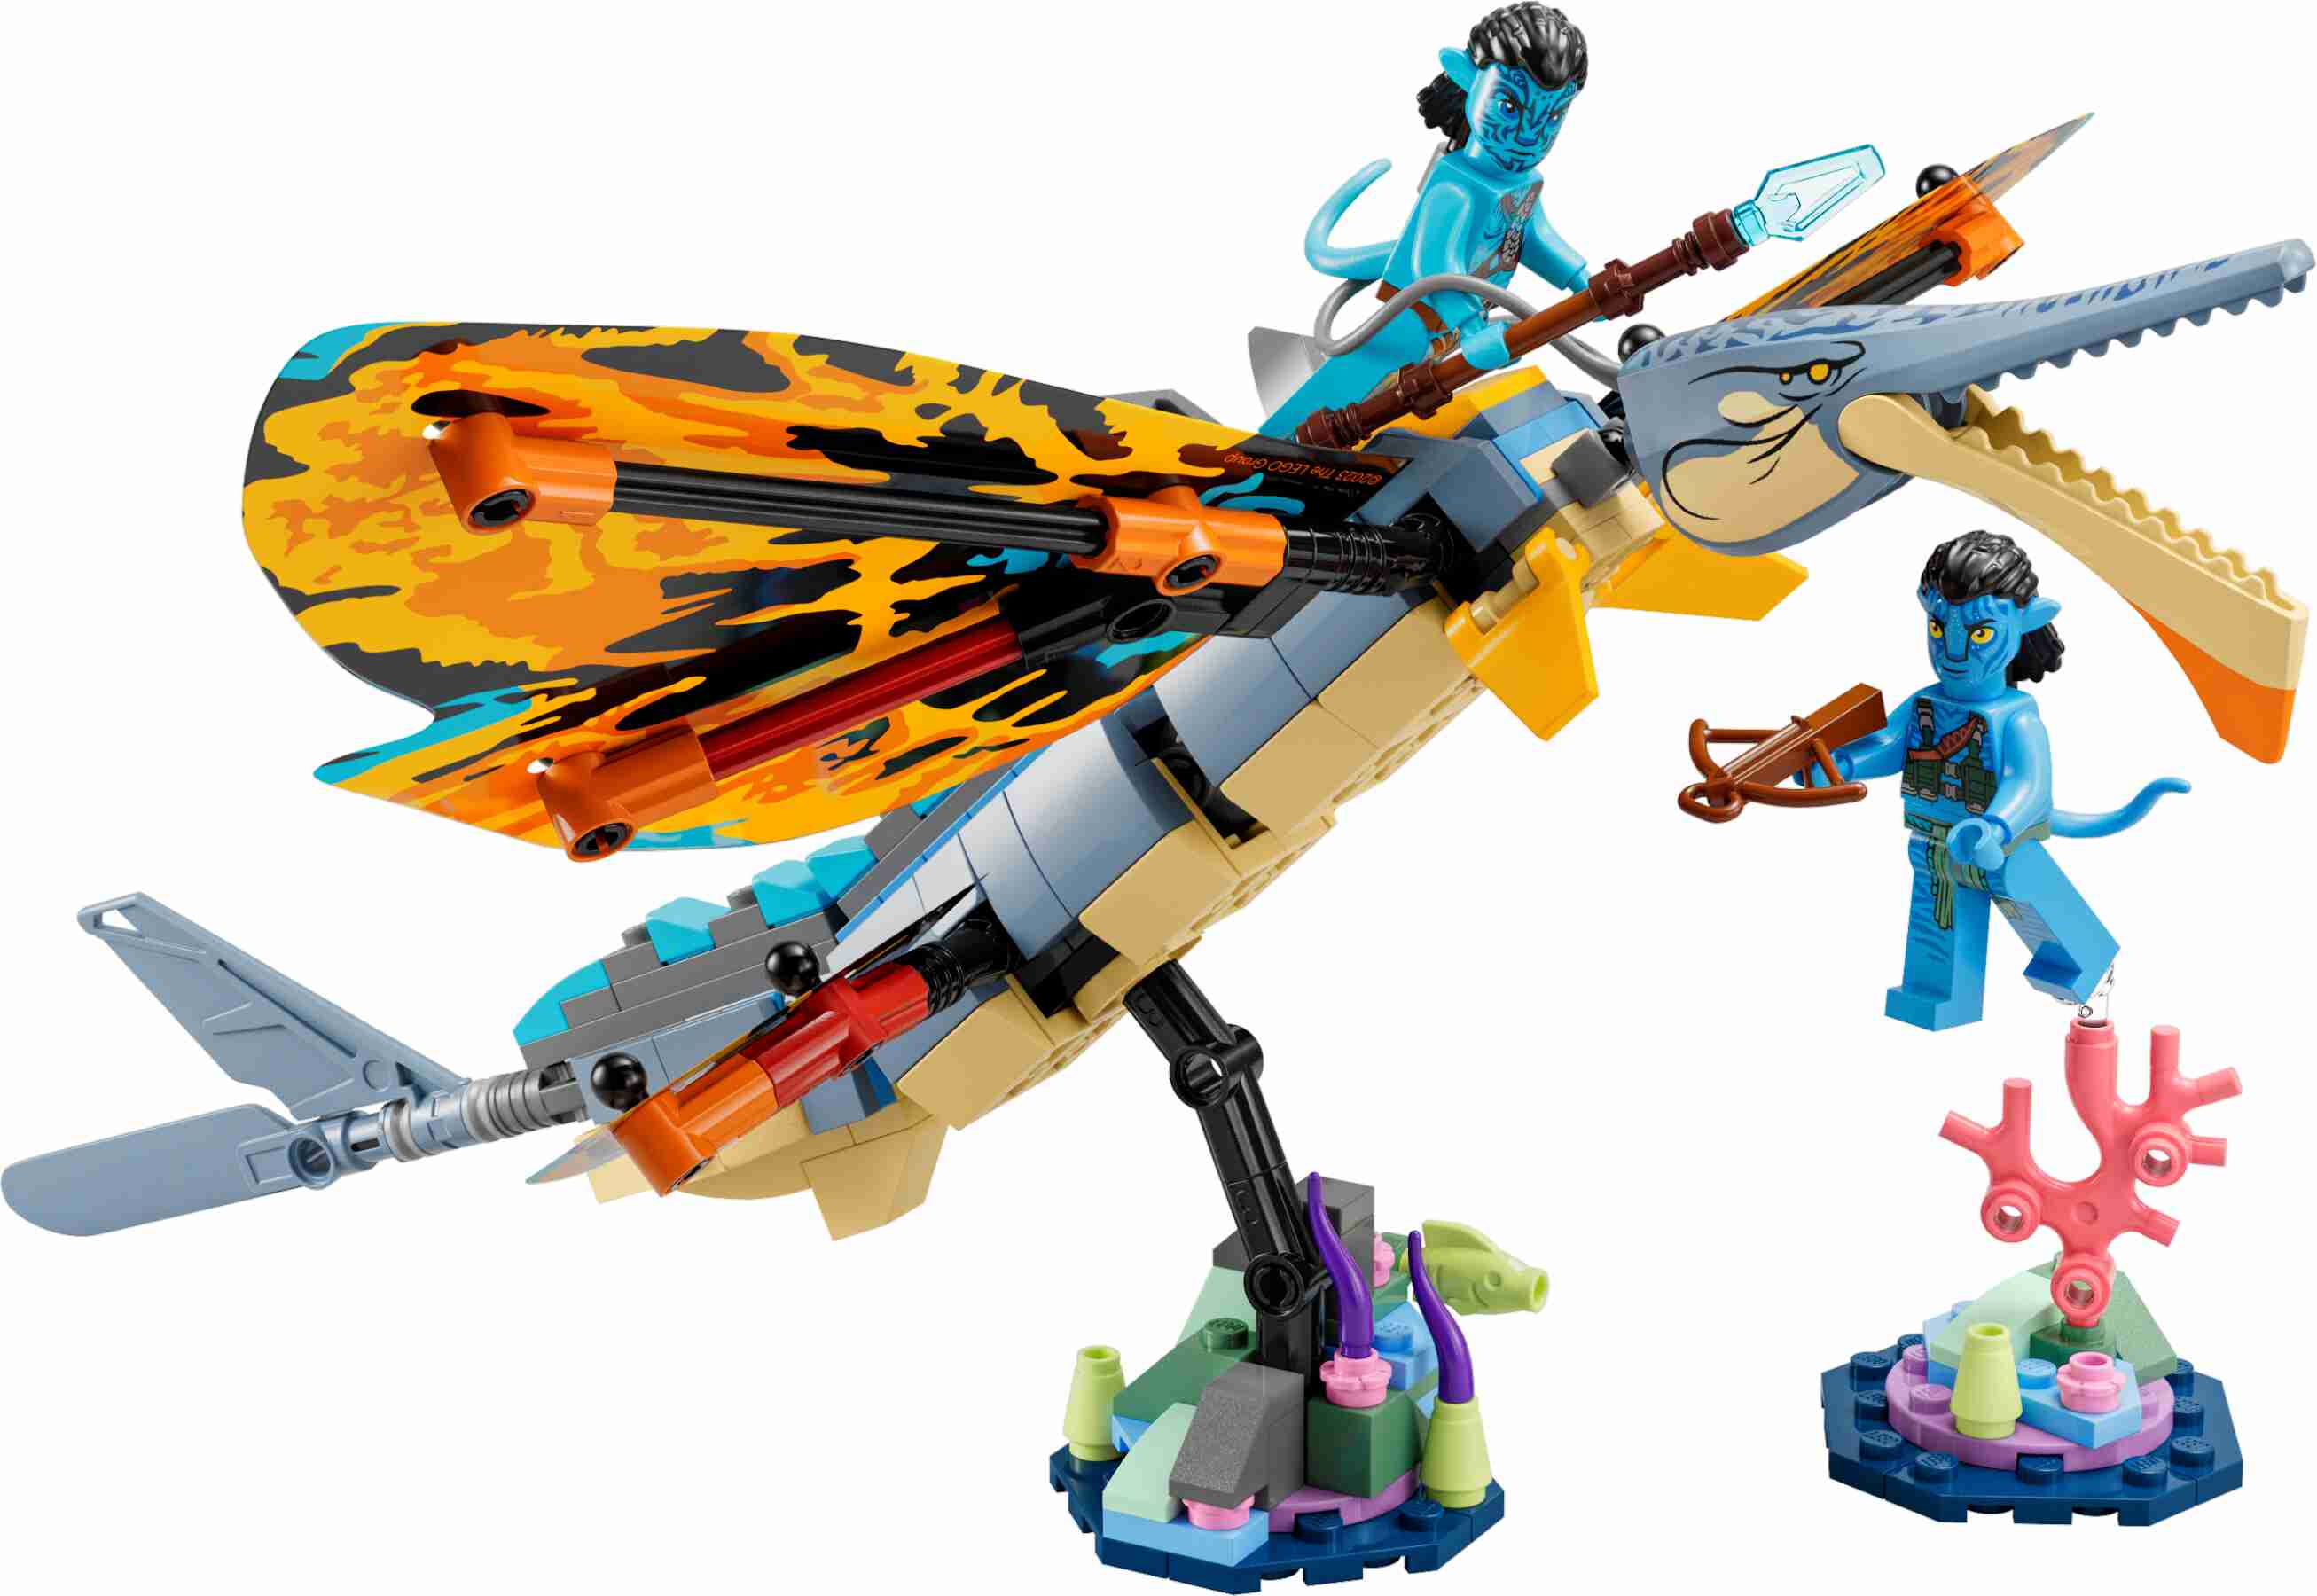 LEGO 75576 Avatar Skimwing Abenteuer, Tonowari und Jake Sully, Korallenriff